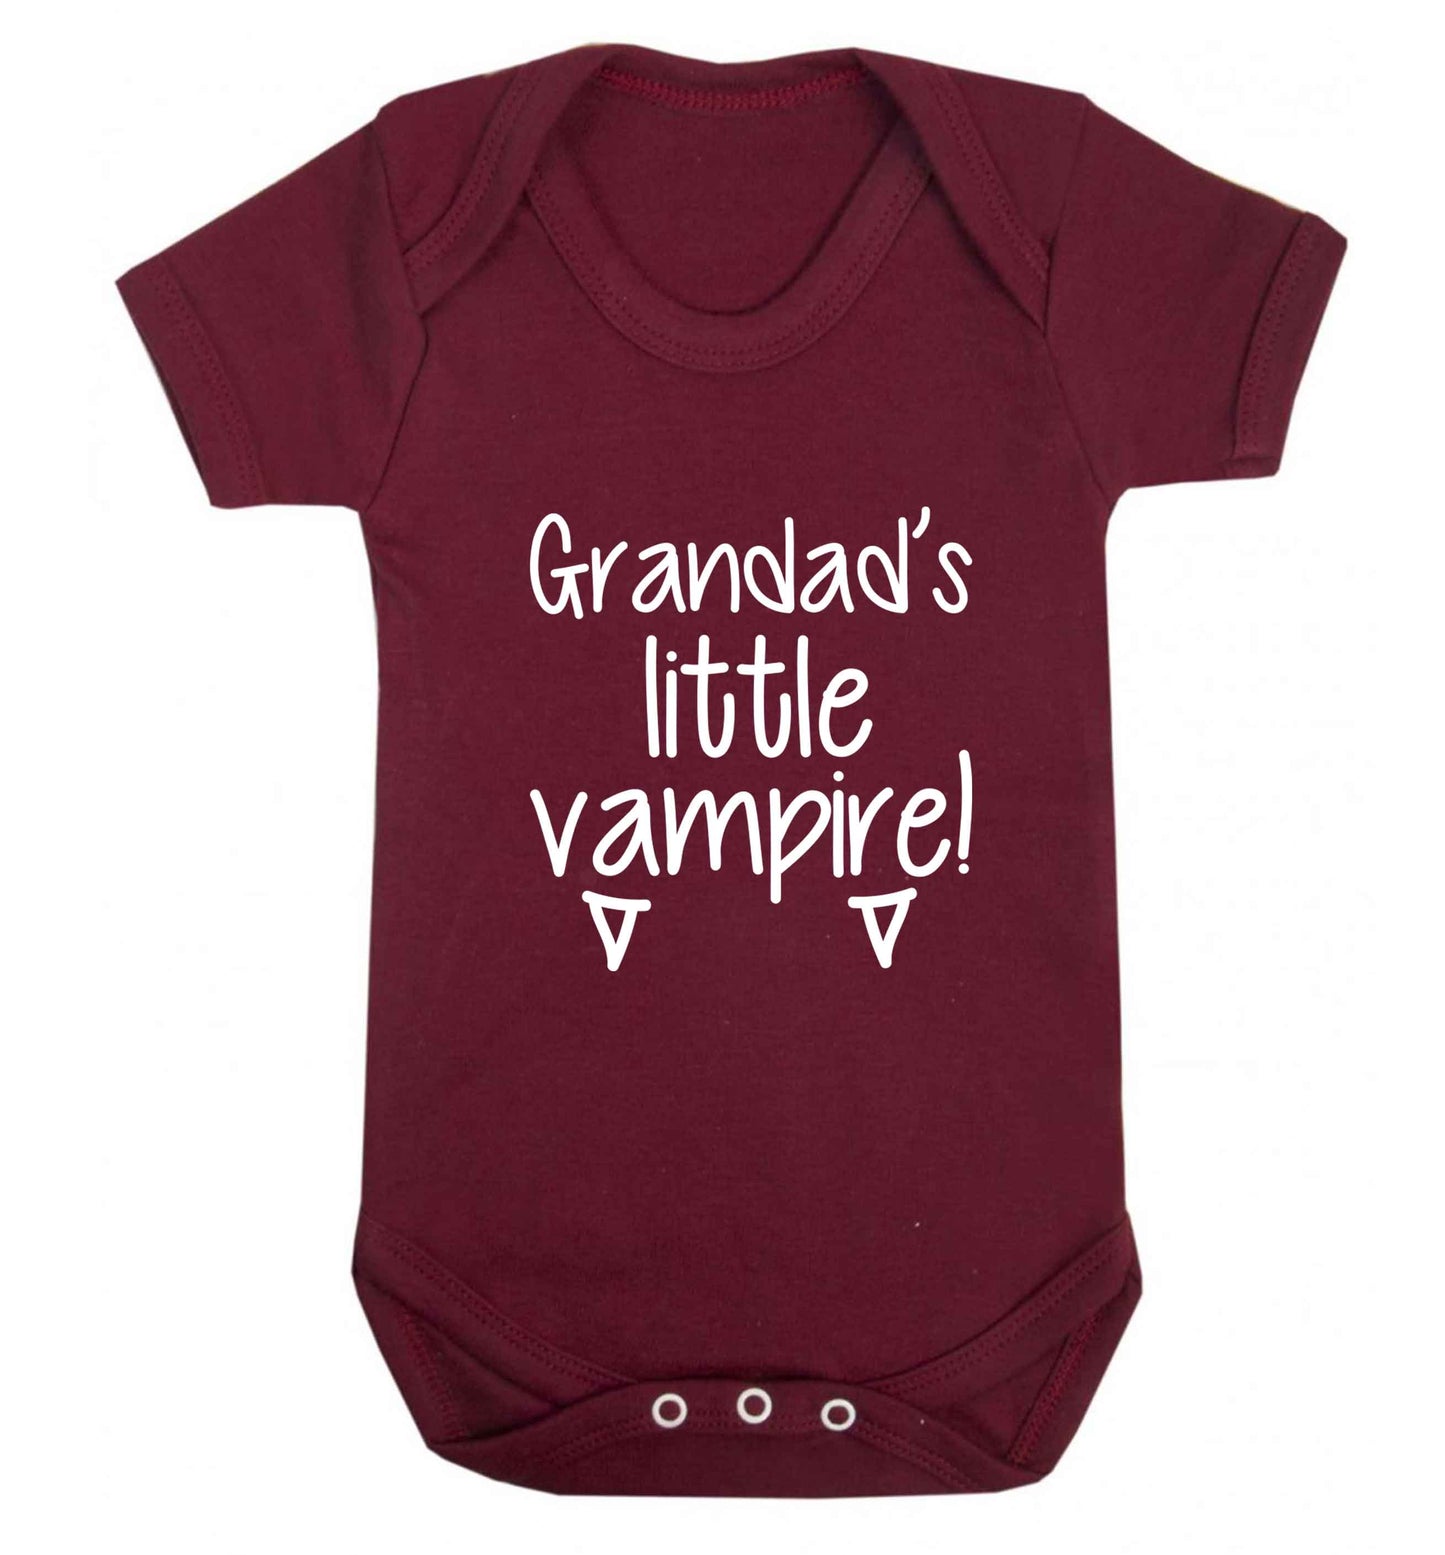 Grandad's little vampire baby vest maroon 18-24 months